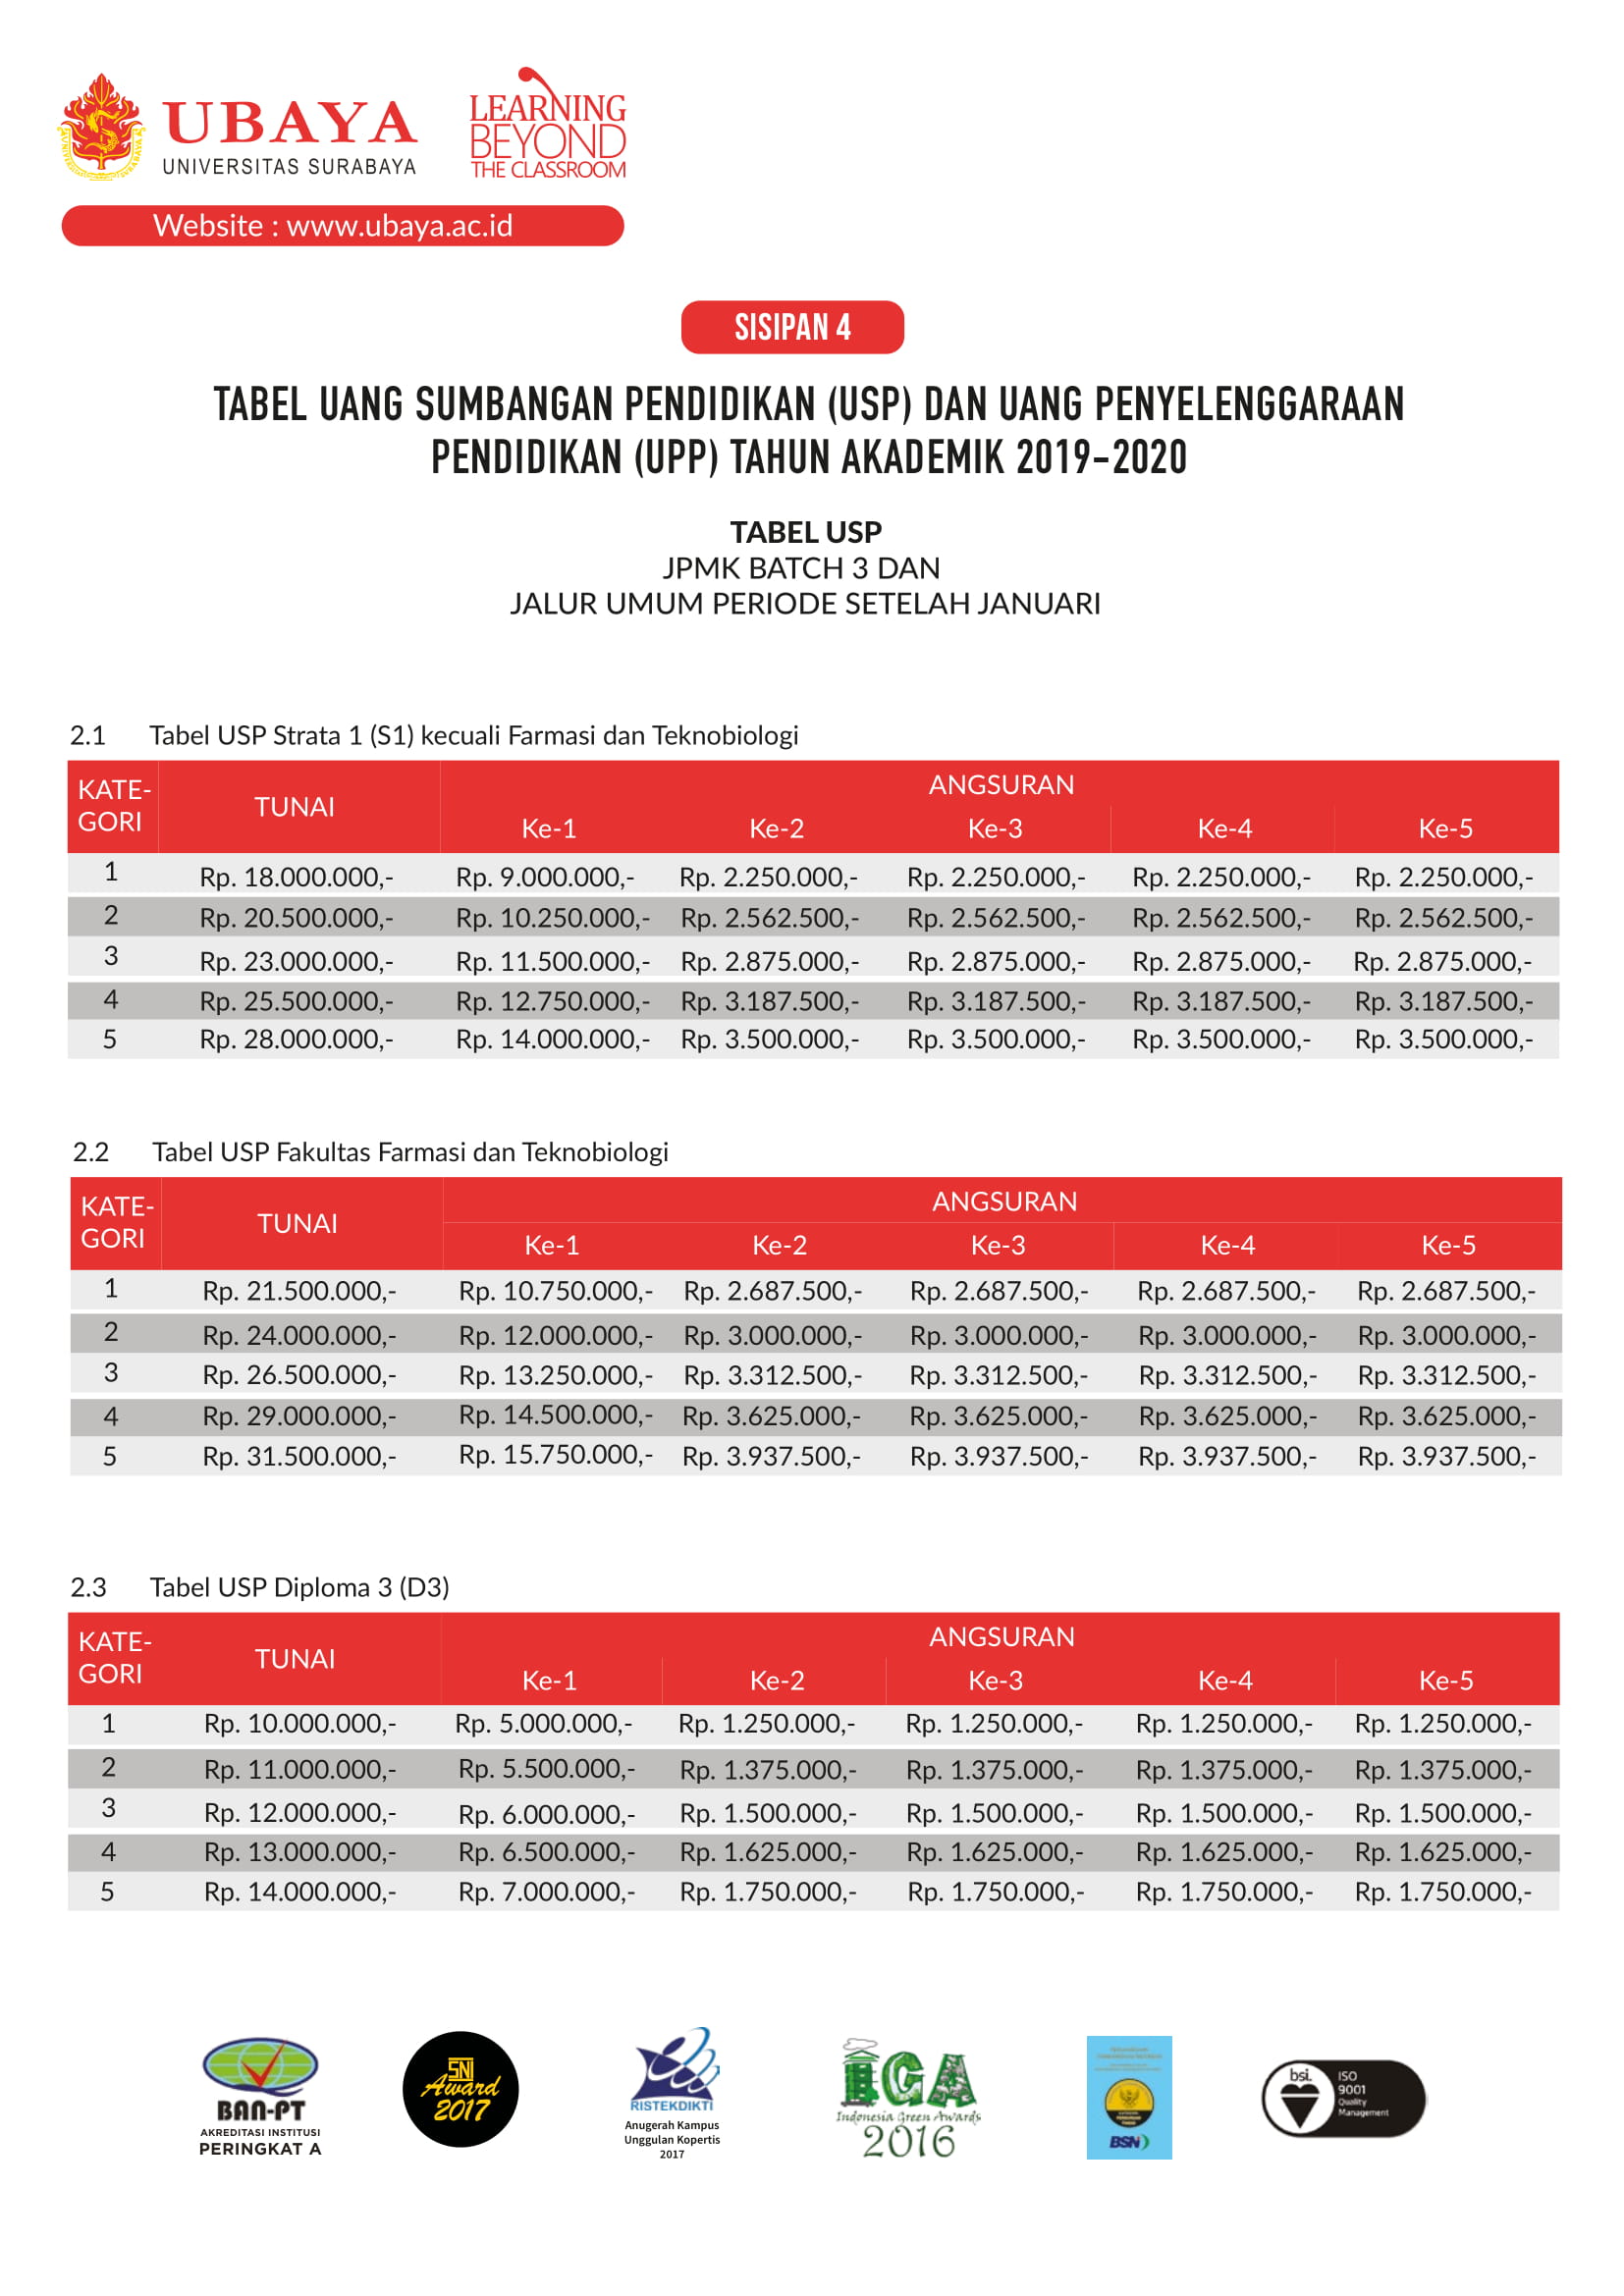 Biaya Kuliah Ubaya Universitas Surabaya 20192020